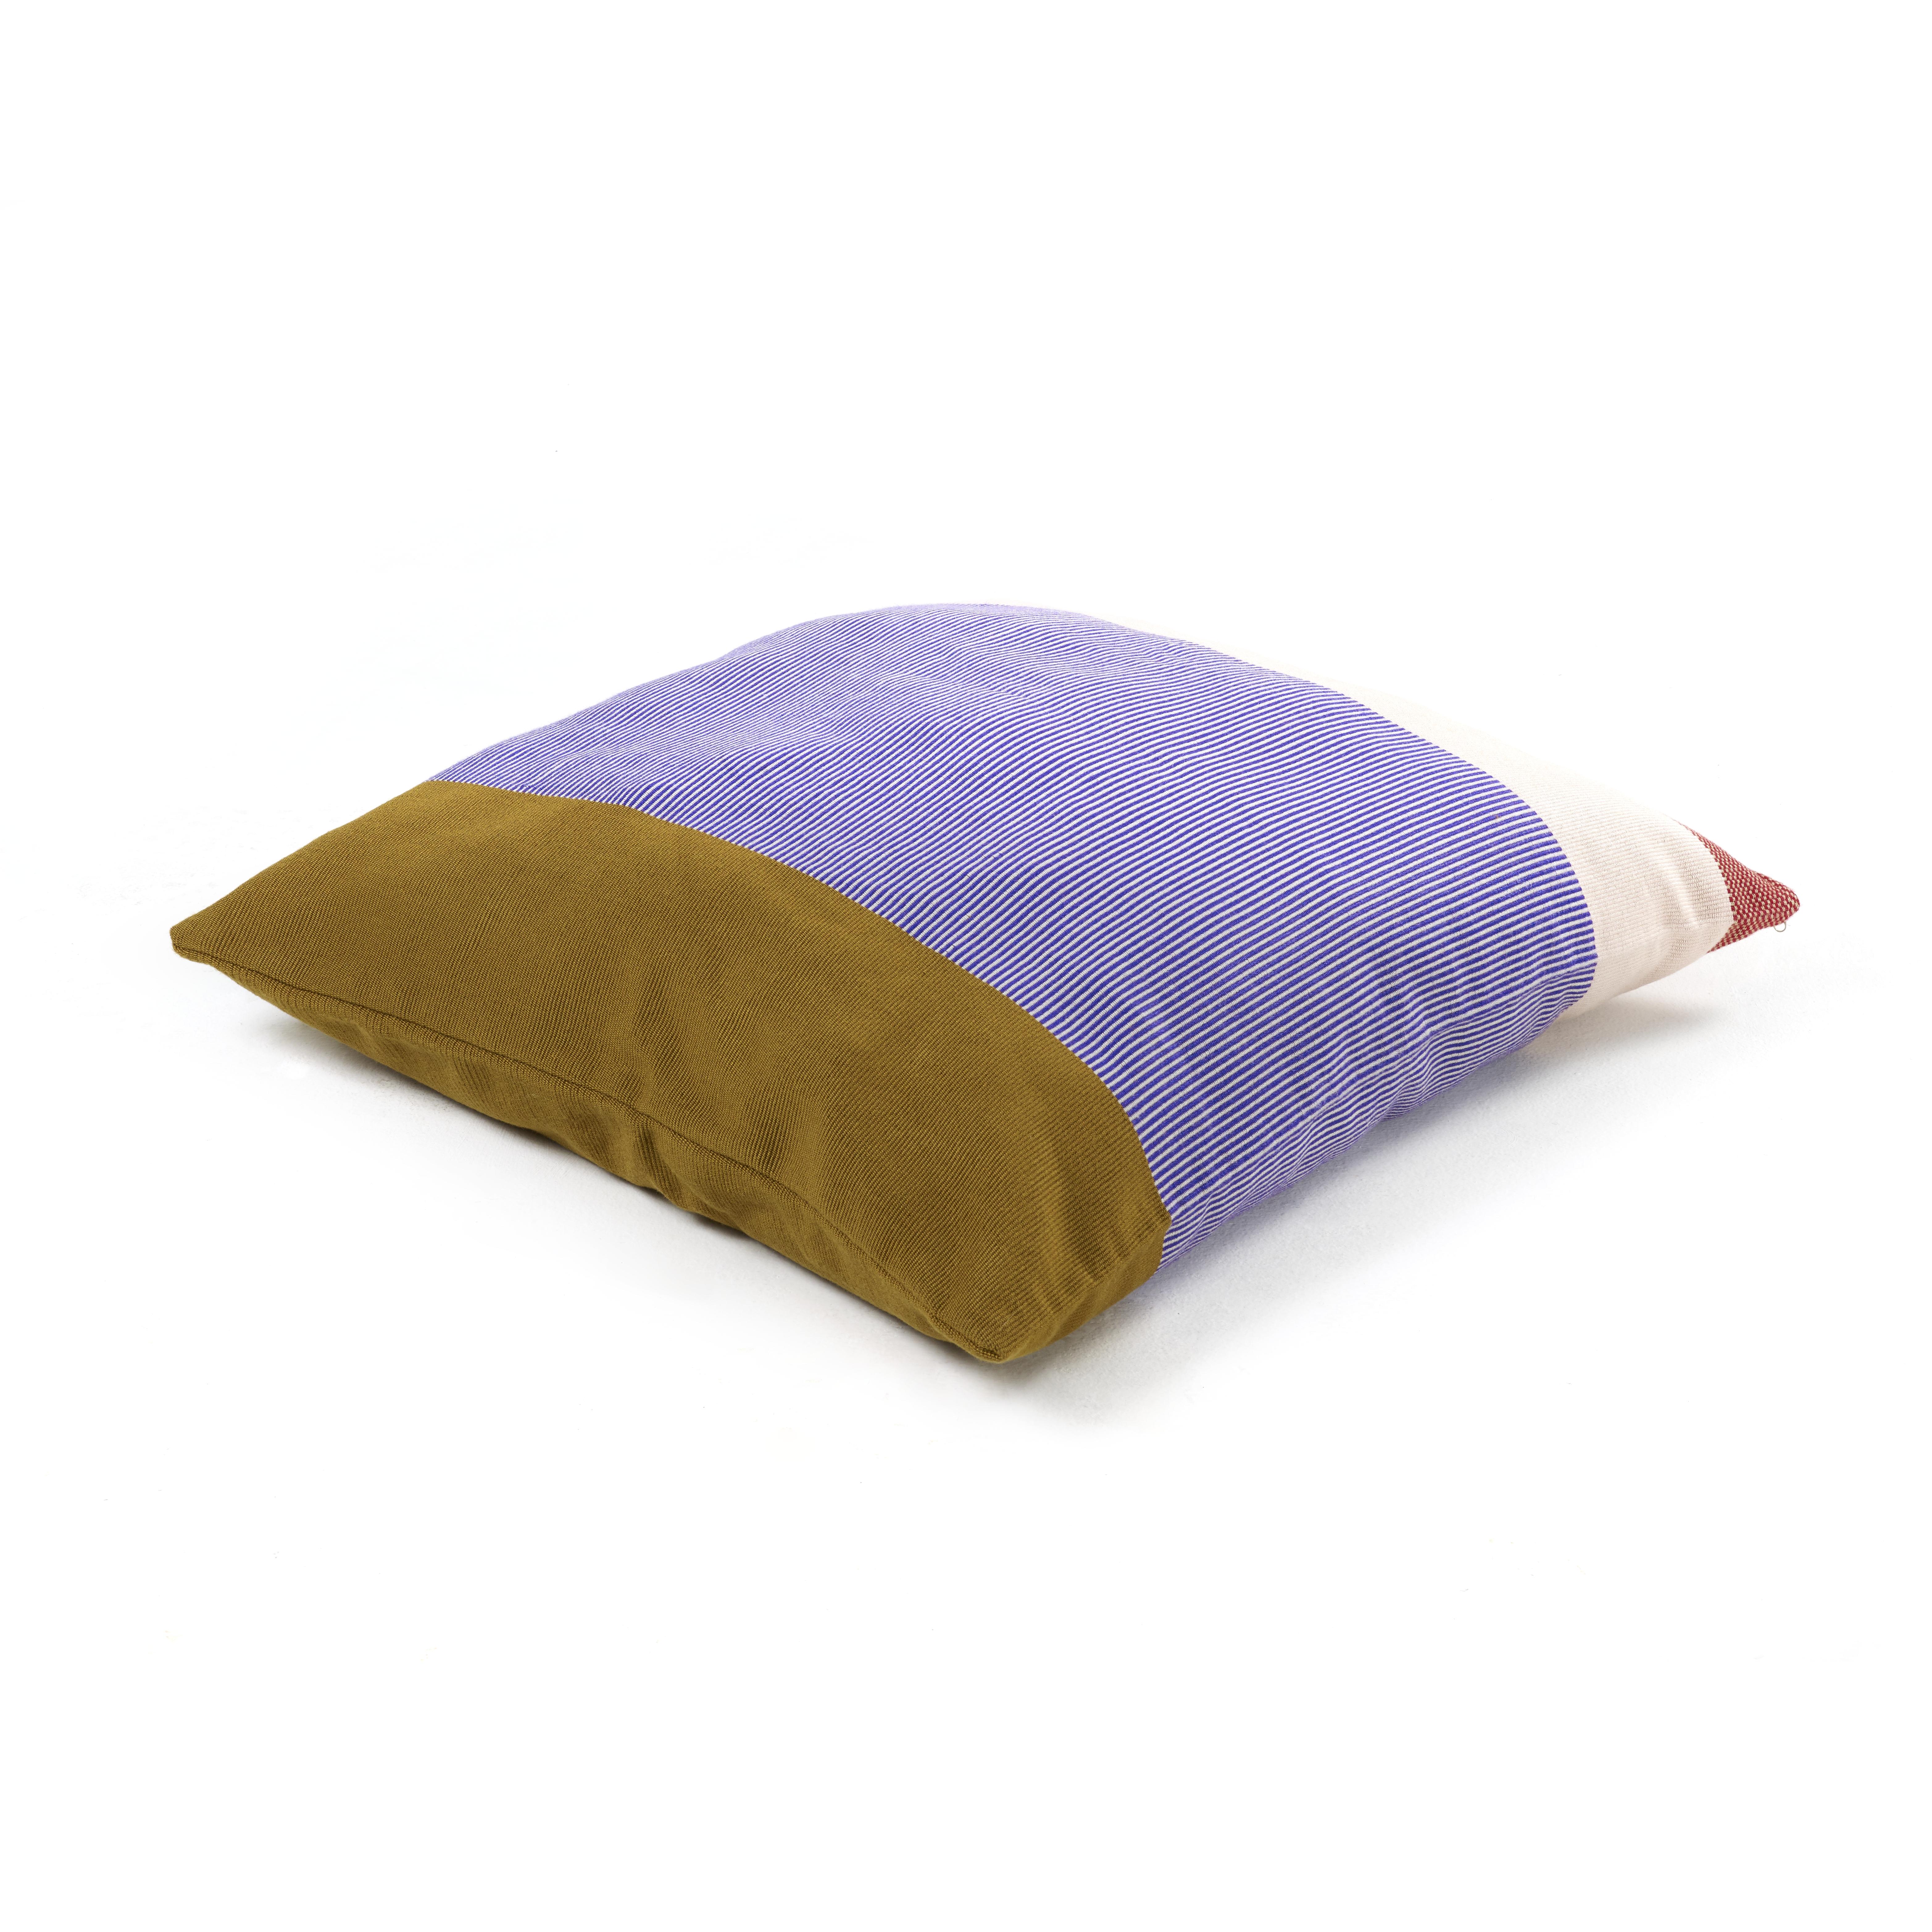 Maraca pillow 1 by Sebastian Herkner
Materials: 100% Cotton. 
Technique: Hand-woven in Colombia. 
Dimensions: W 50 x H 50 cm 
Available in colors: verde/ purpura/ rojo, naranja/ dorado/ rojo, dorado/ purpura/ rojo. 

With their strong